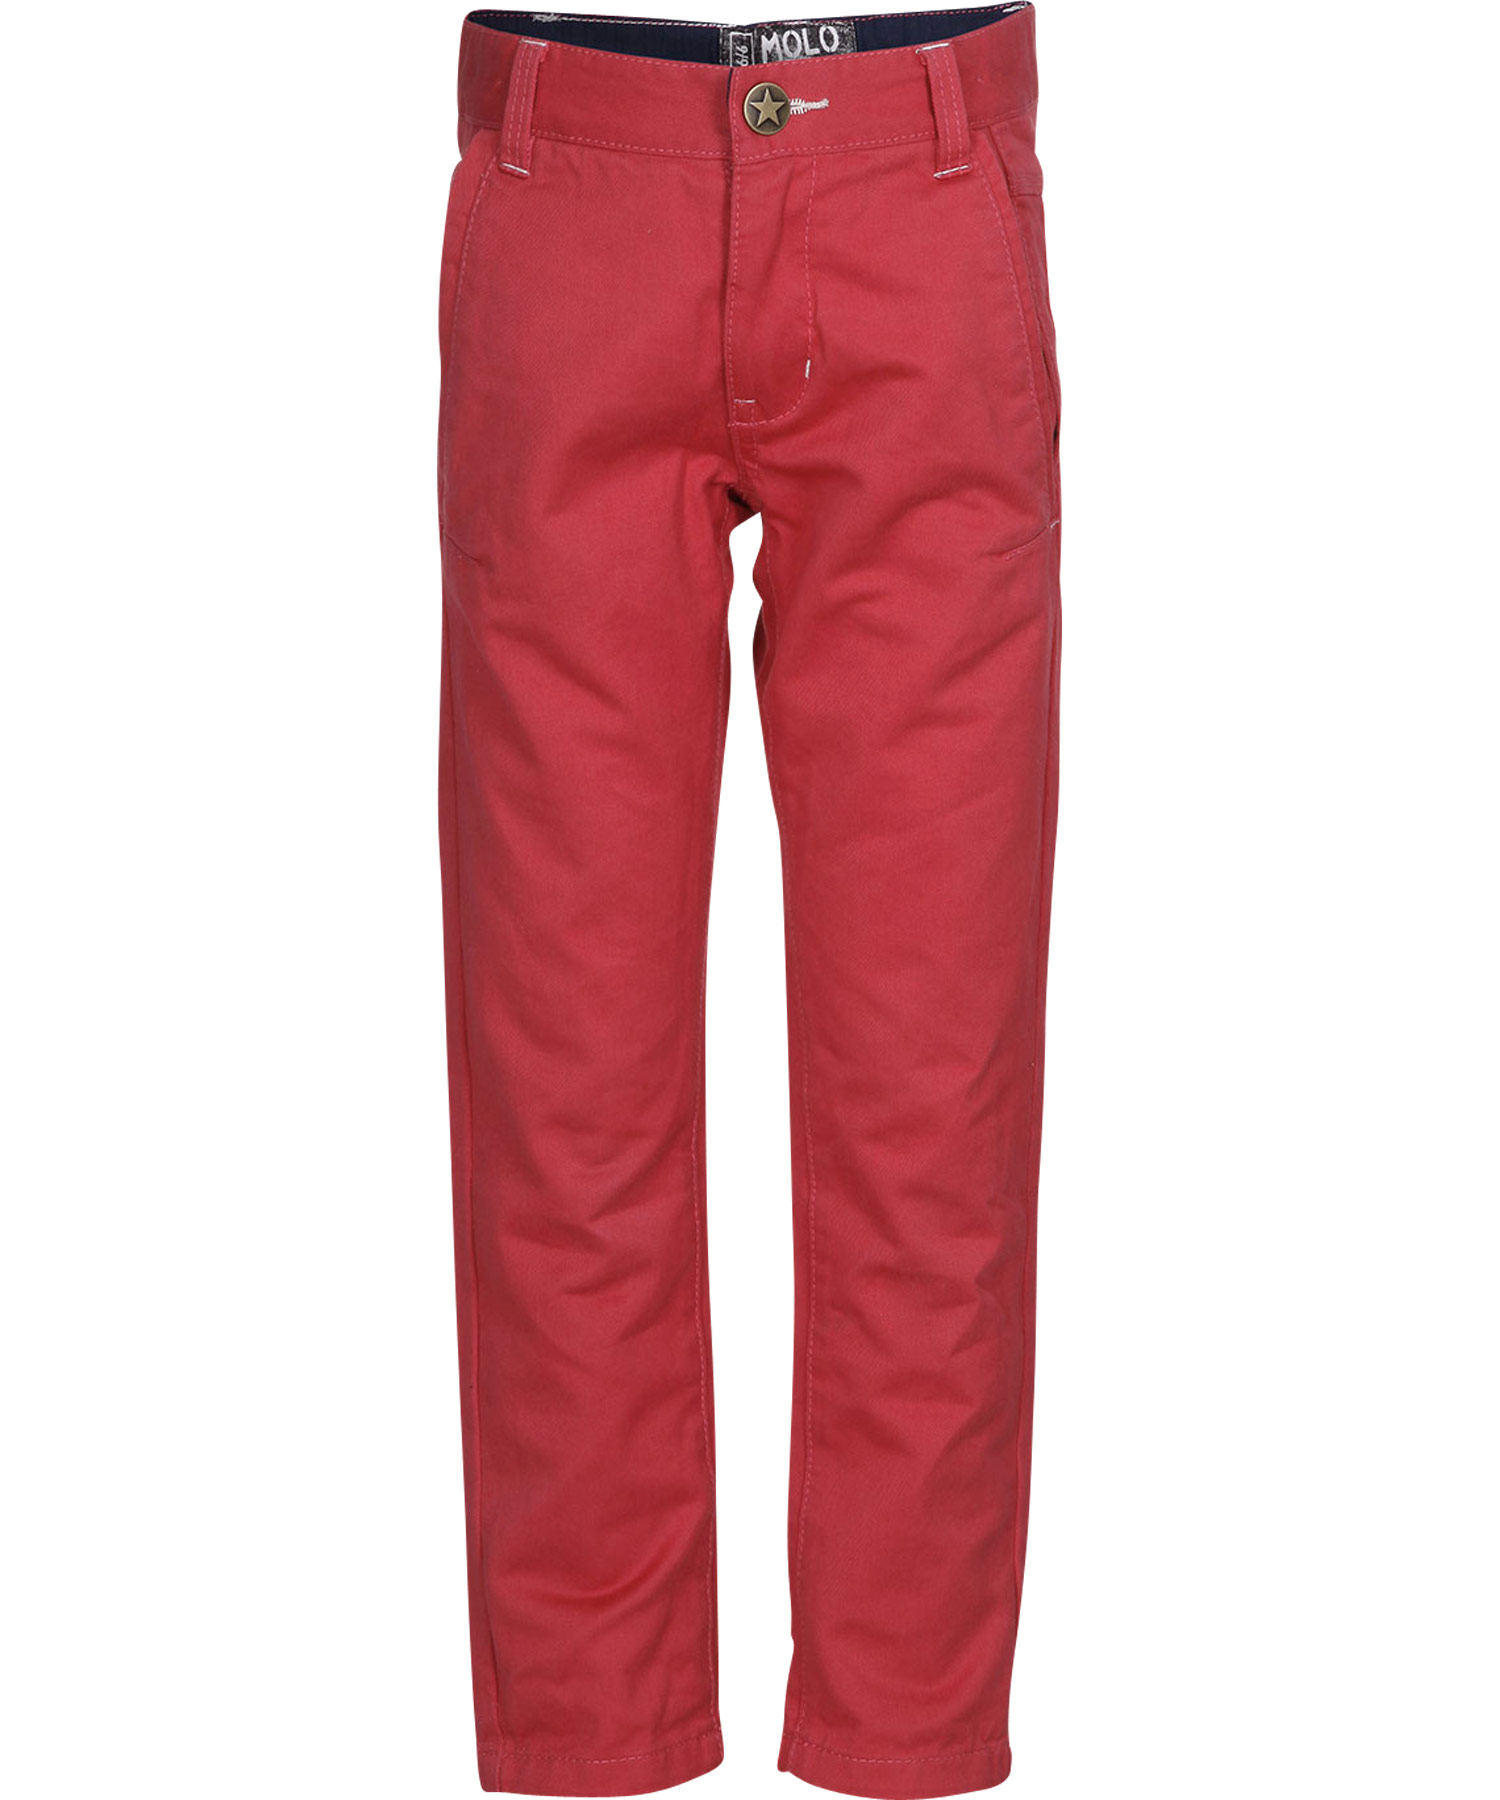 New! Molo amazing red jeans (Ai)